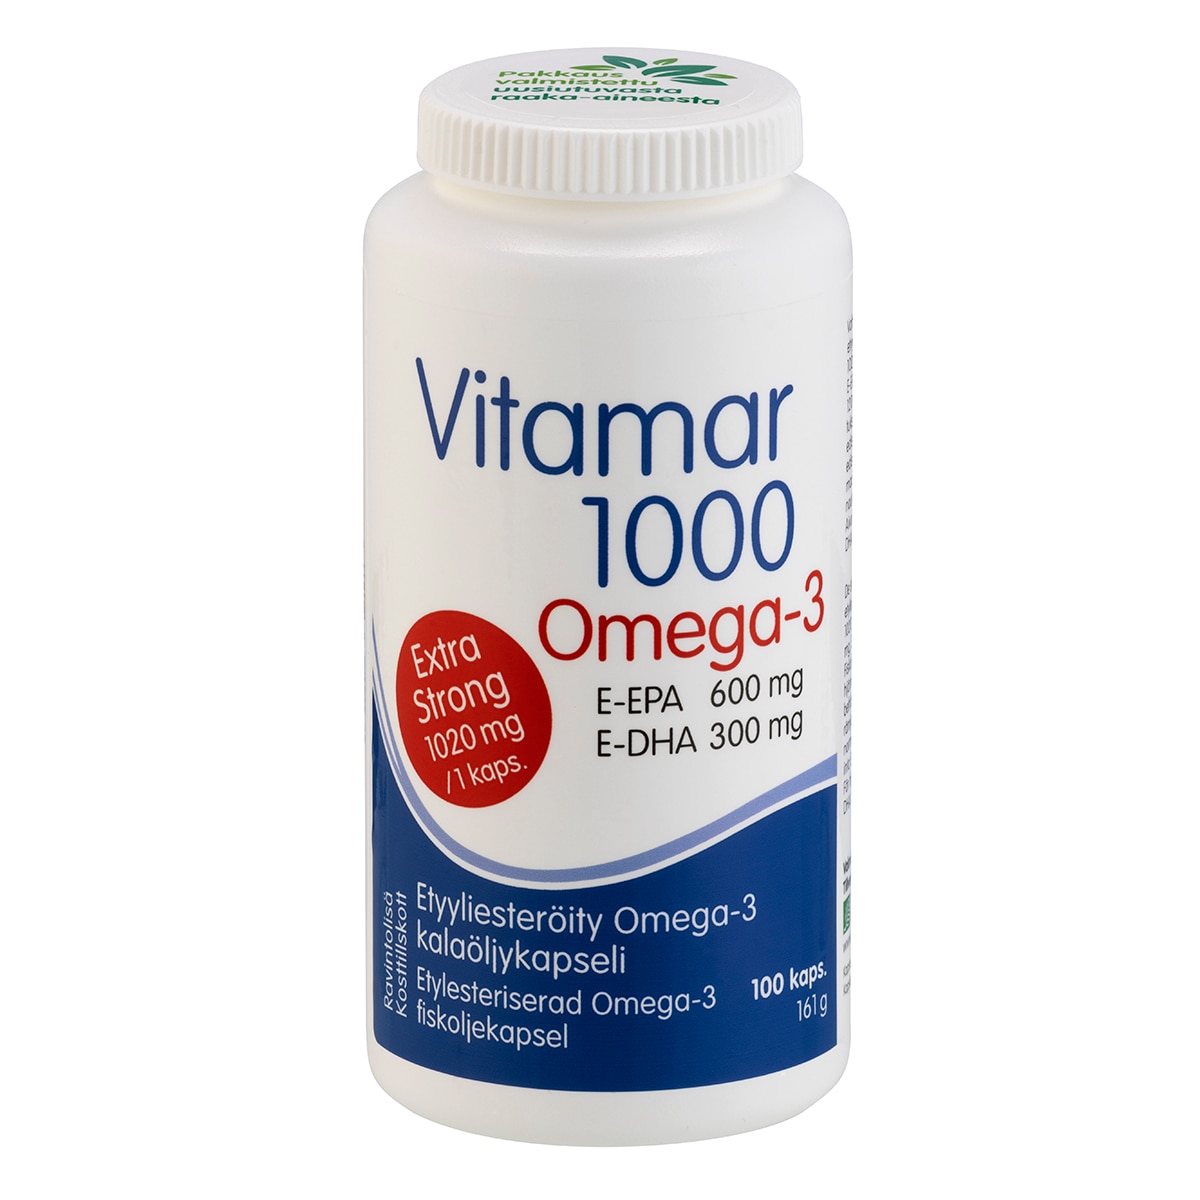 Vitamar 1000 kalaöljy, omega-3 valmiste 100 kaps